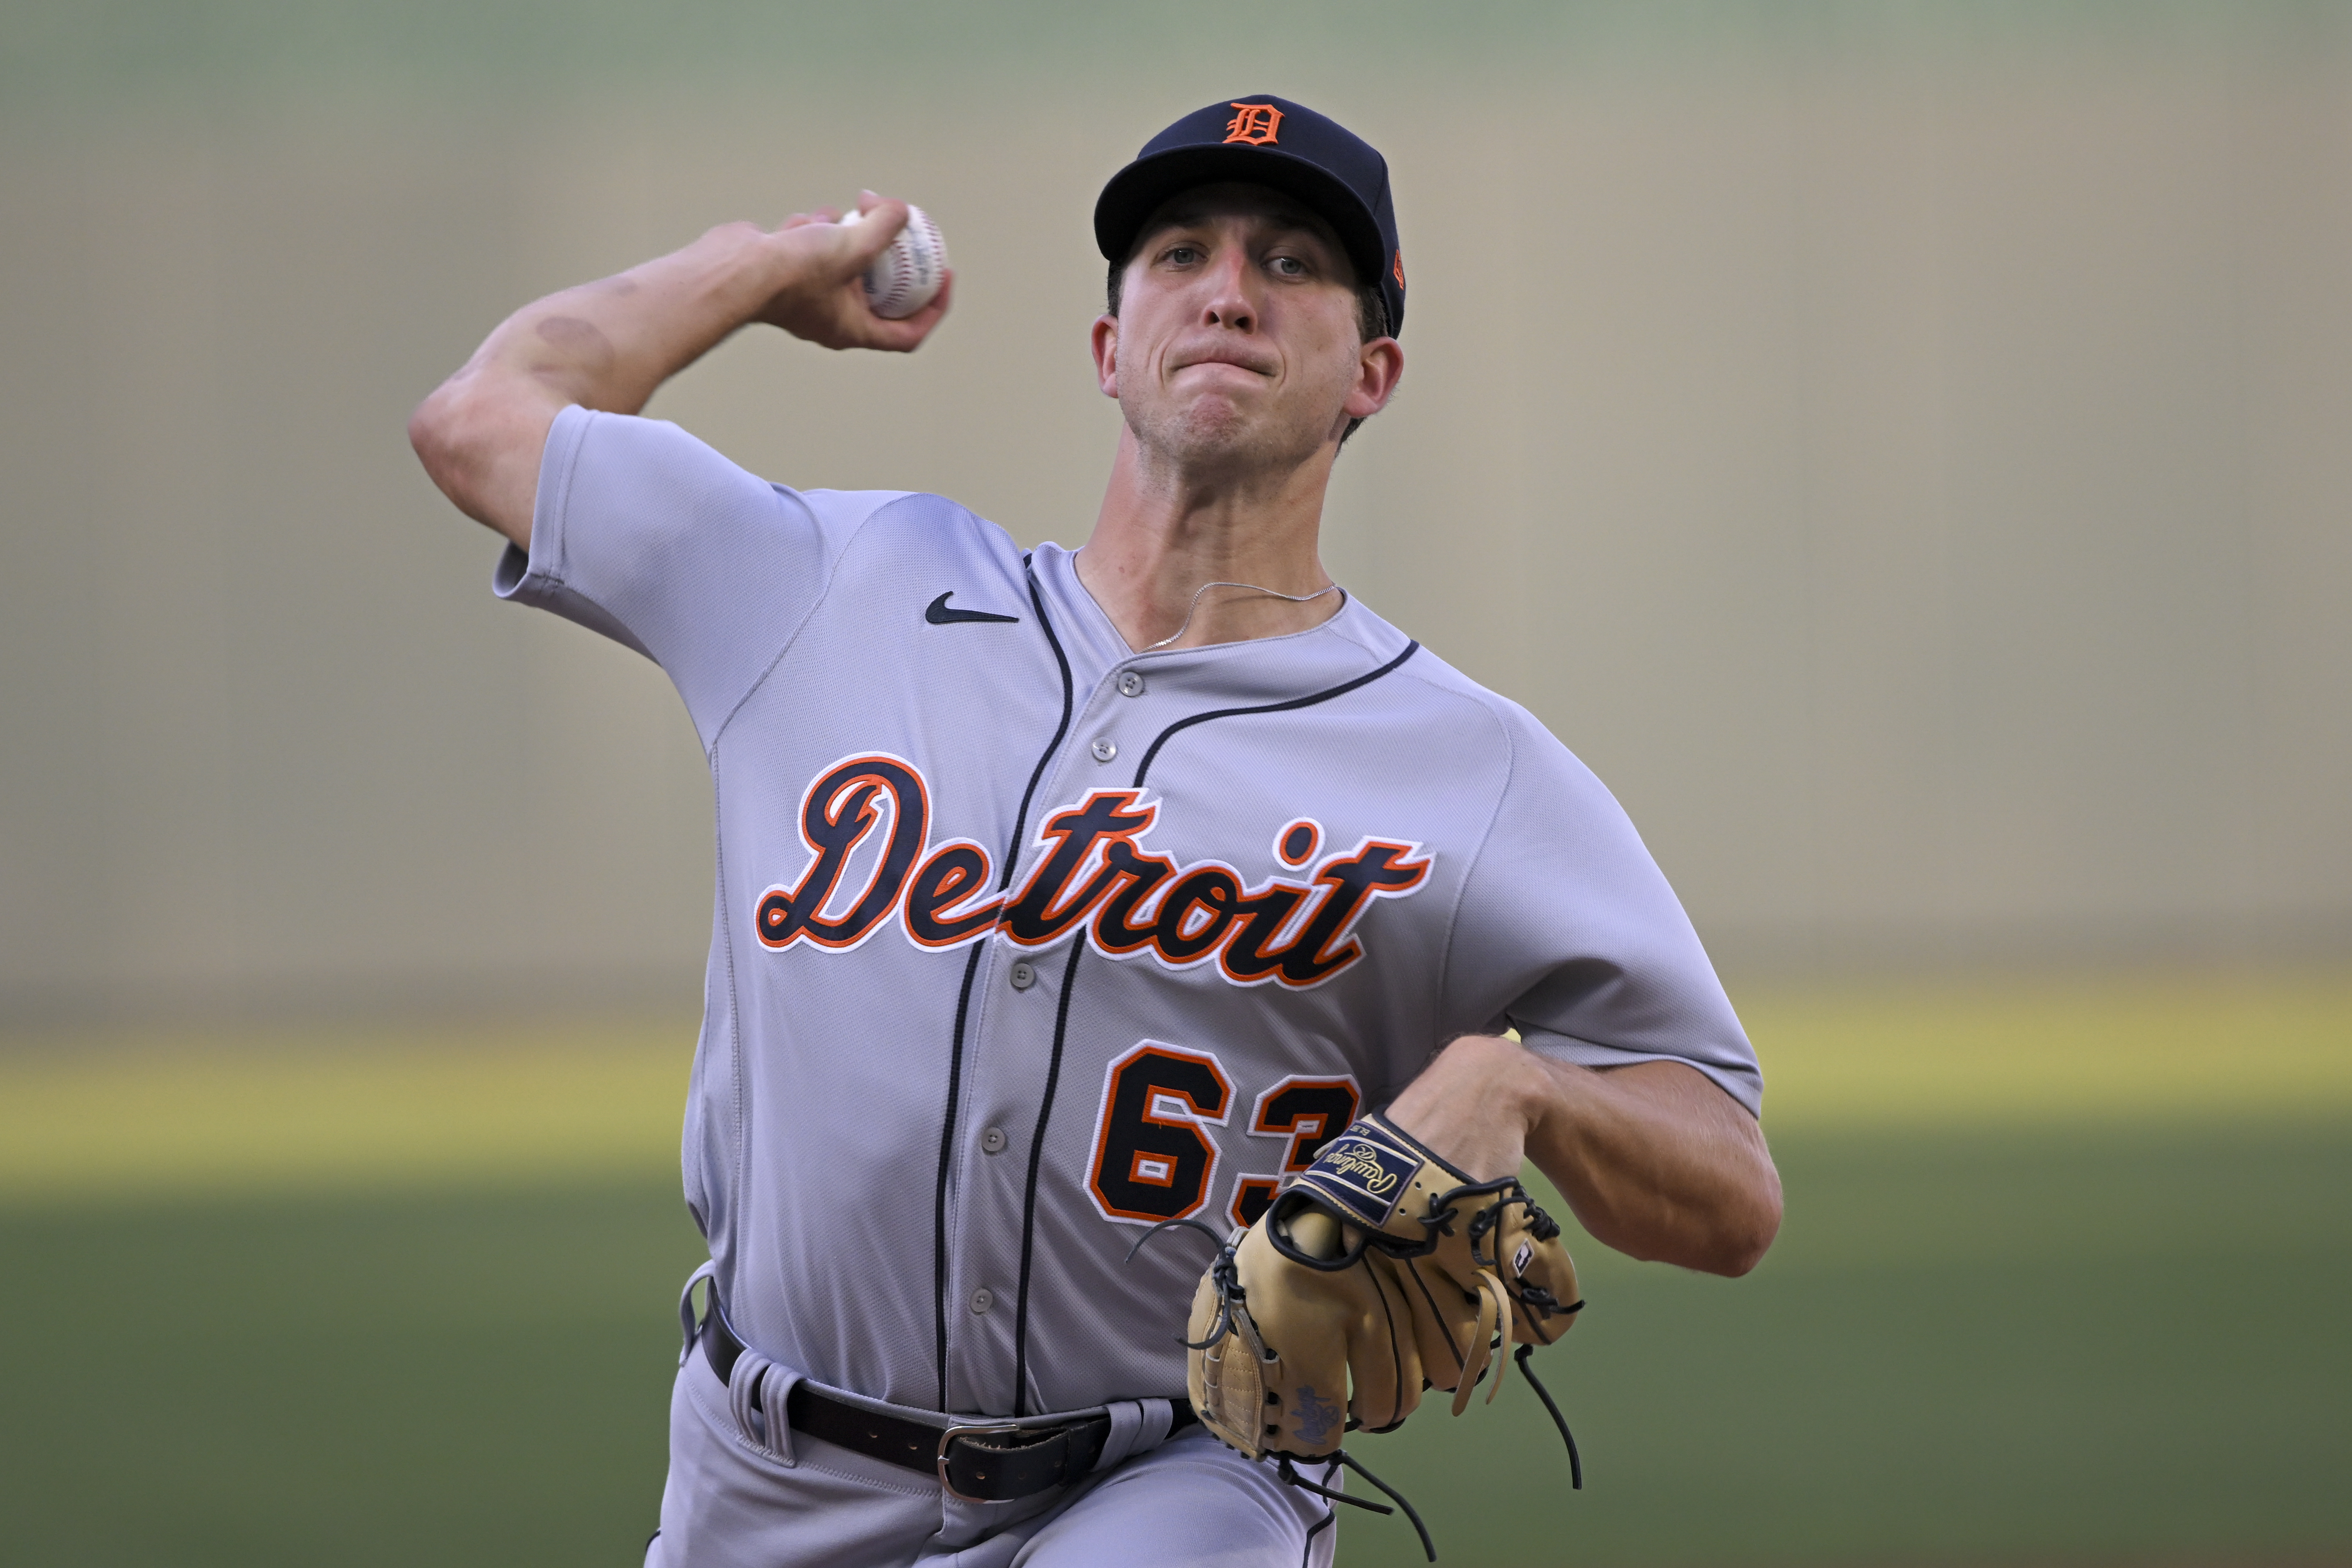 Analyzing Detroit Tigers' rookie Beau Brieske's early game struggles